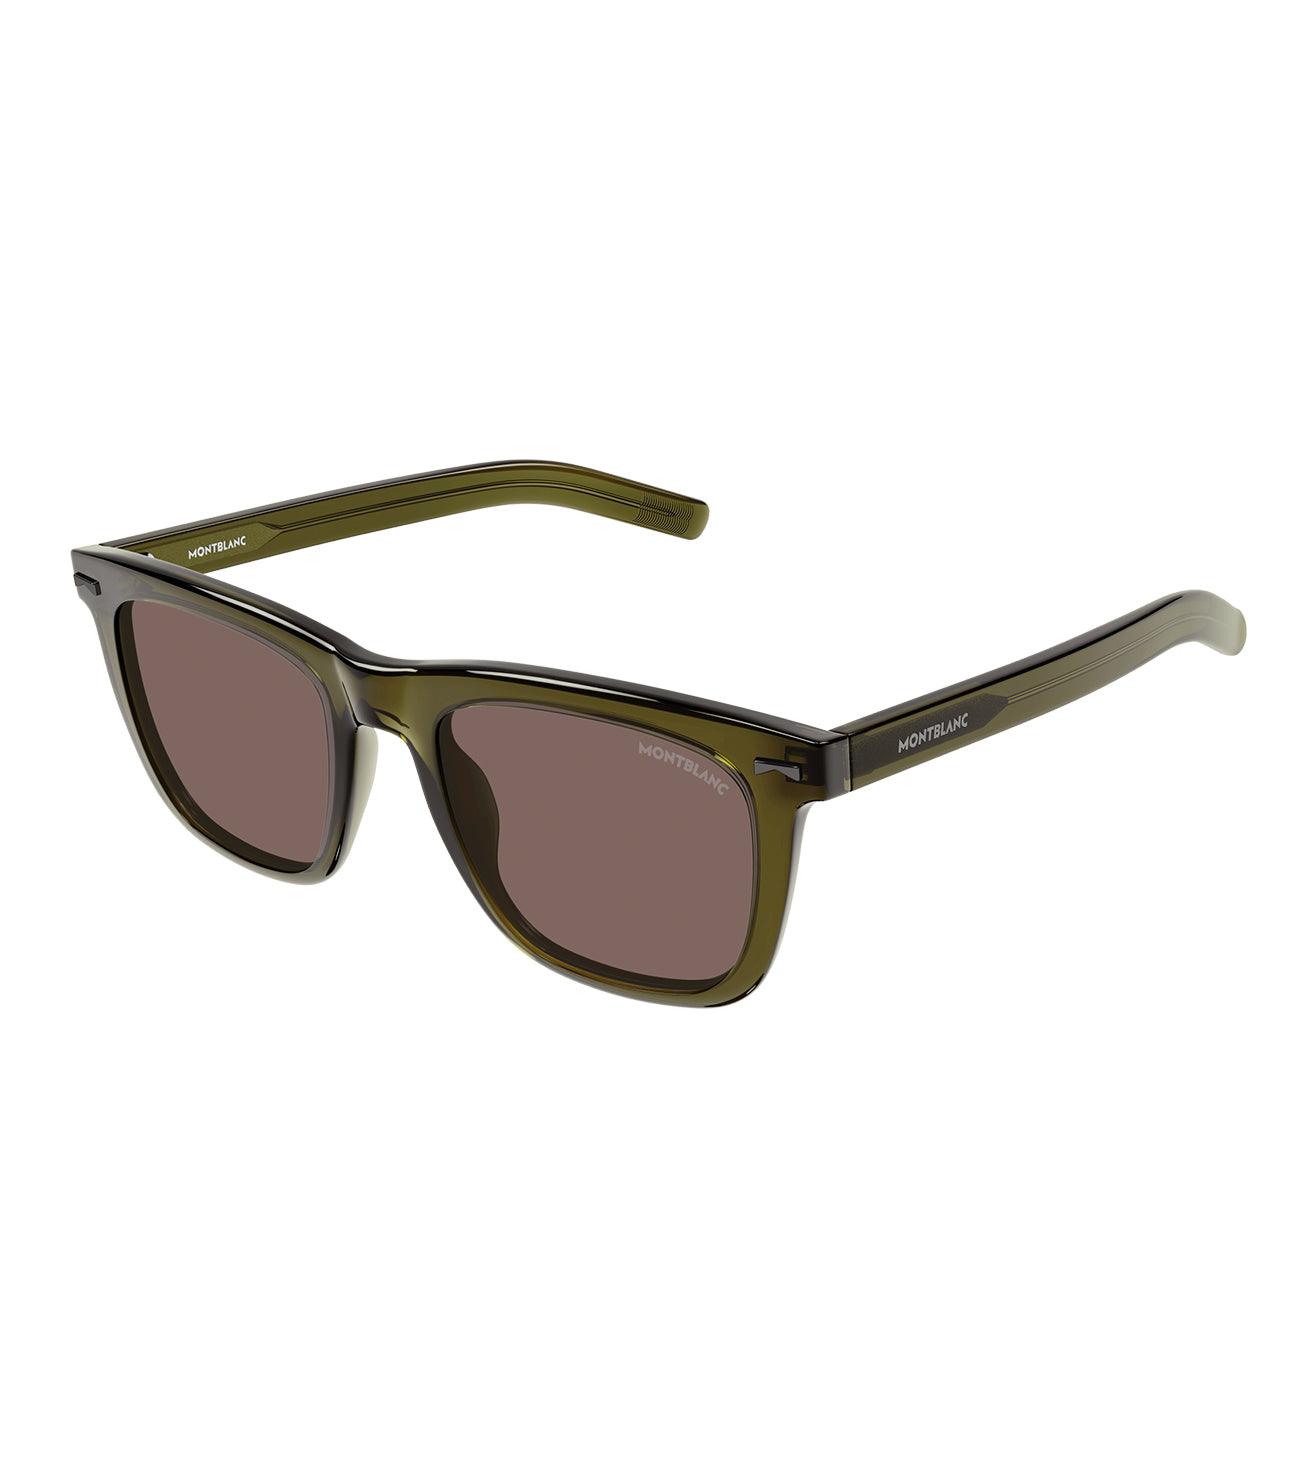 Montblanc Men's Brown Wayfarer Sunglasses